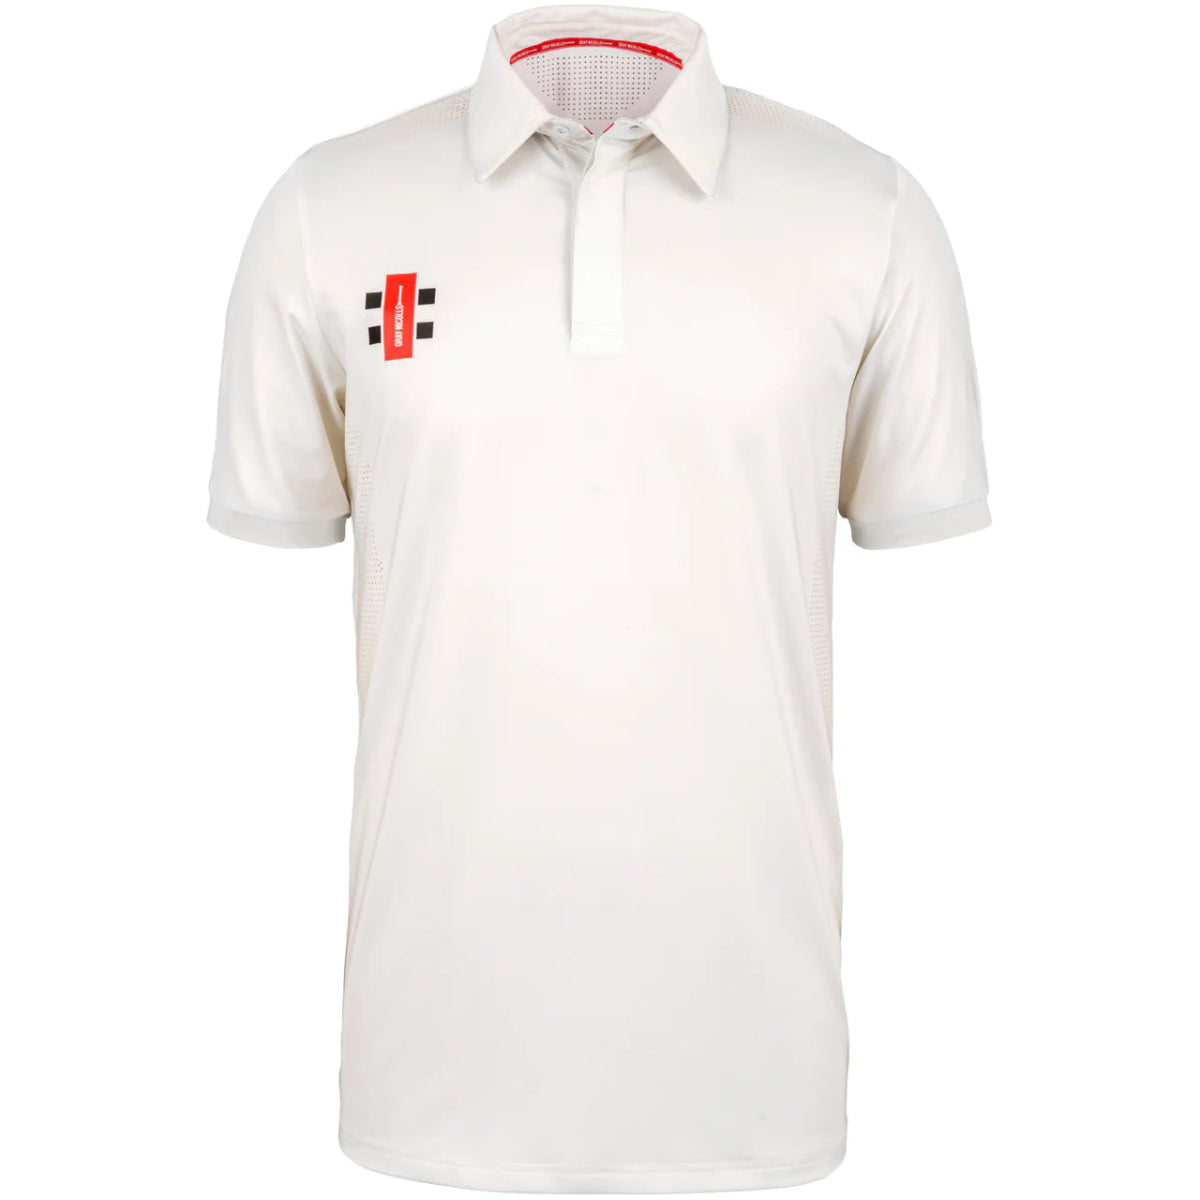 Gray Nicolls Pro Performance Short Sleeves Cricket Shirt - White - Acrux Sports